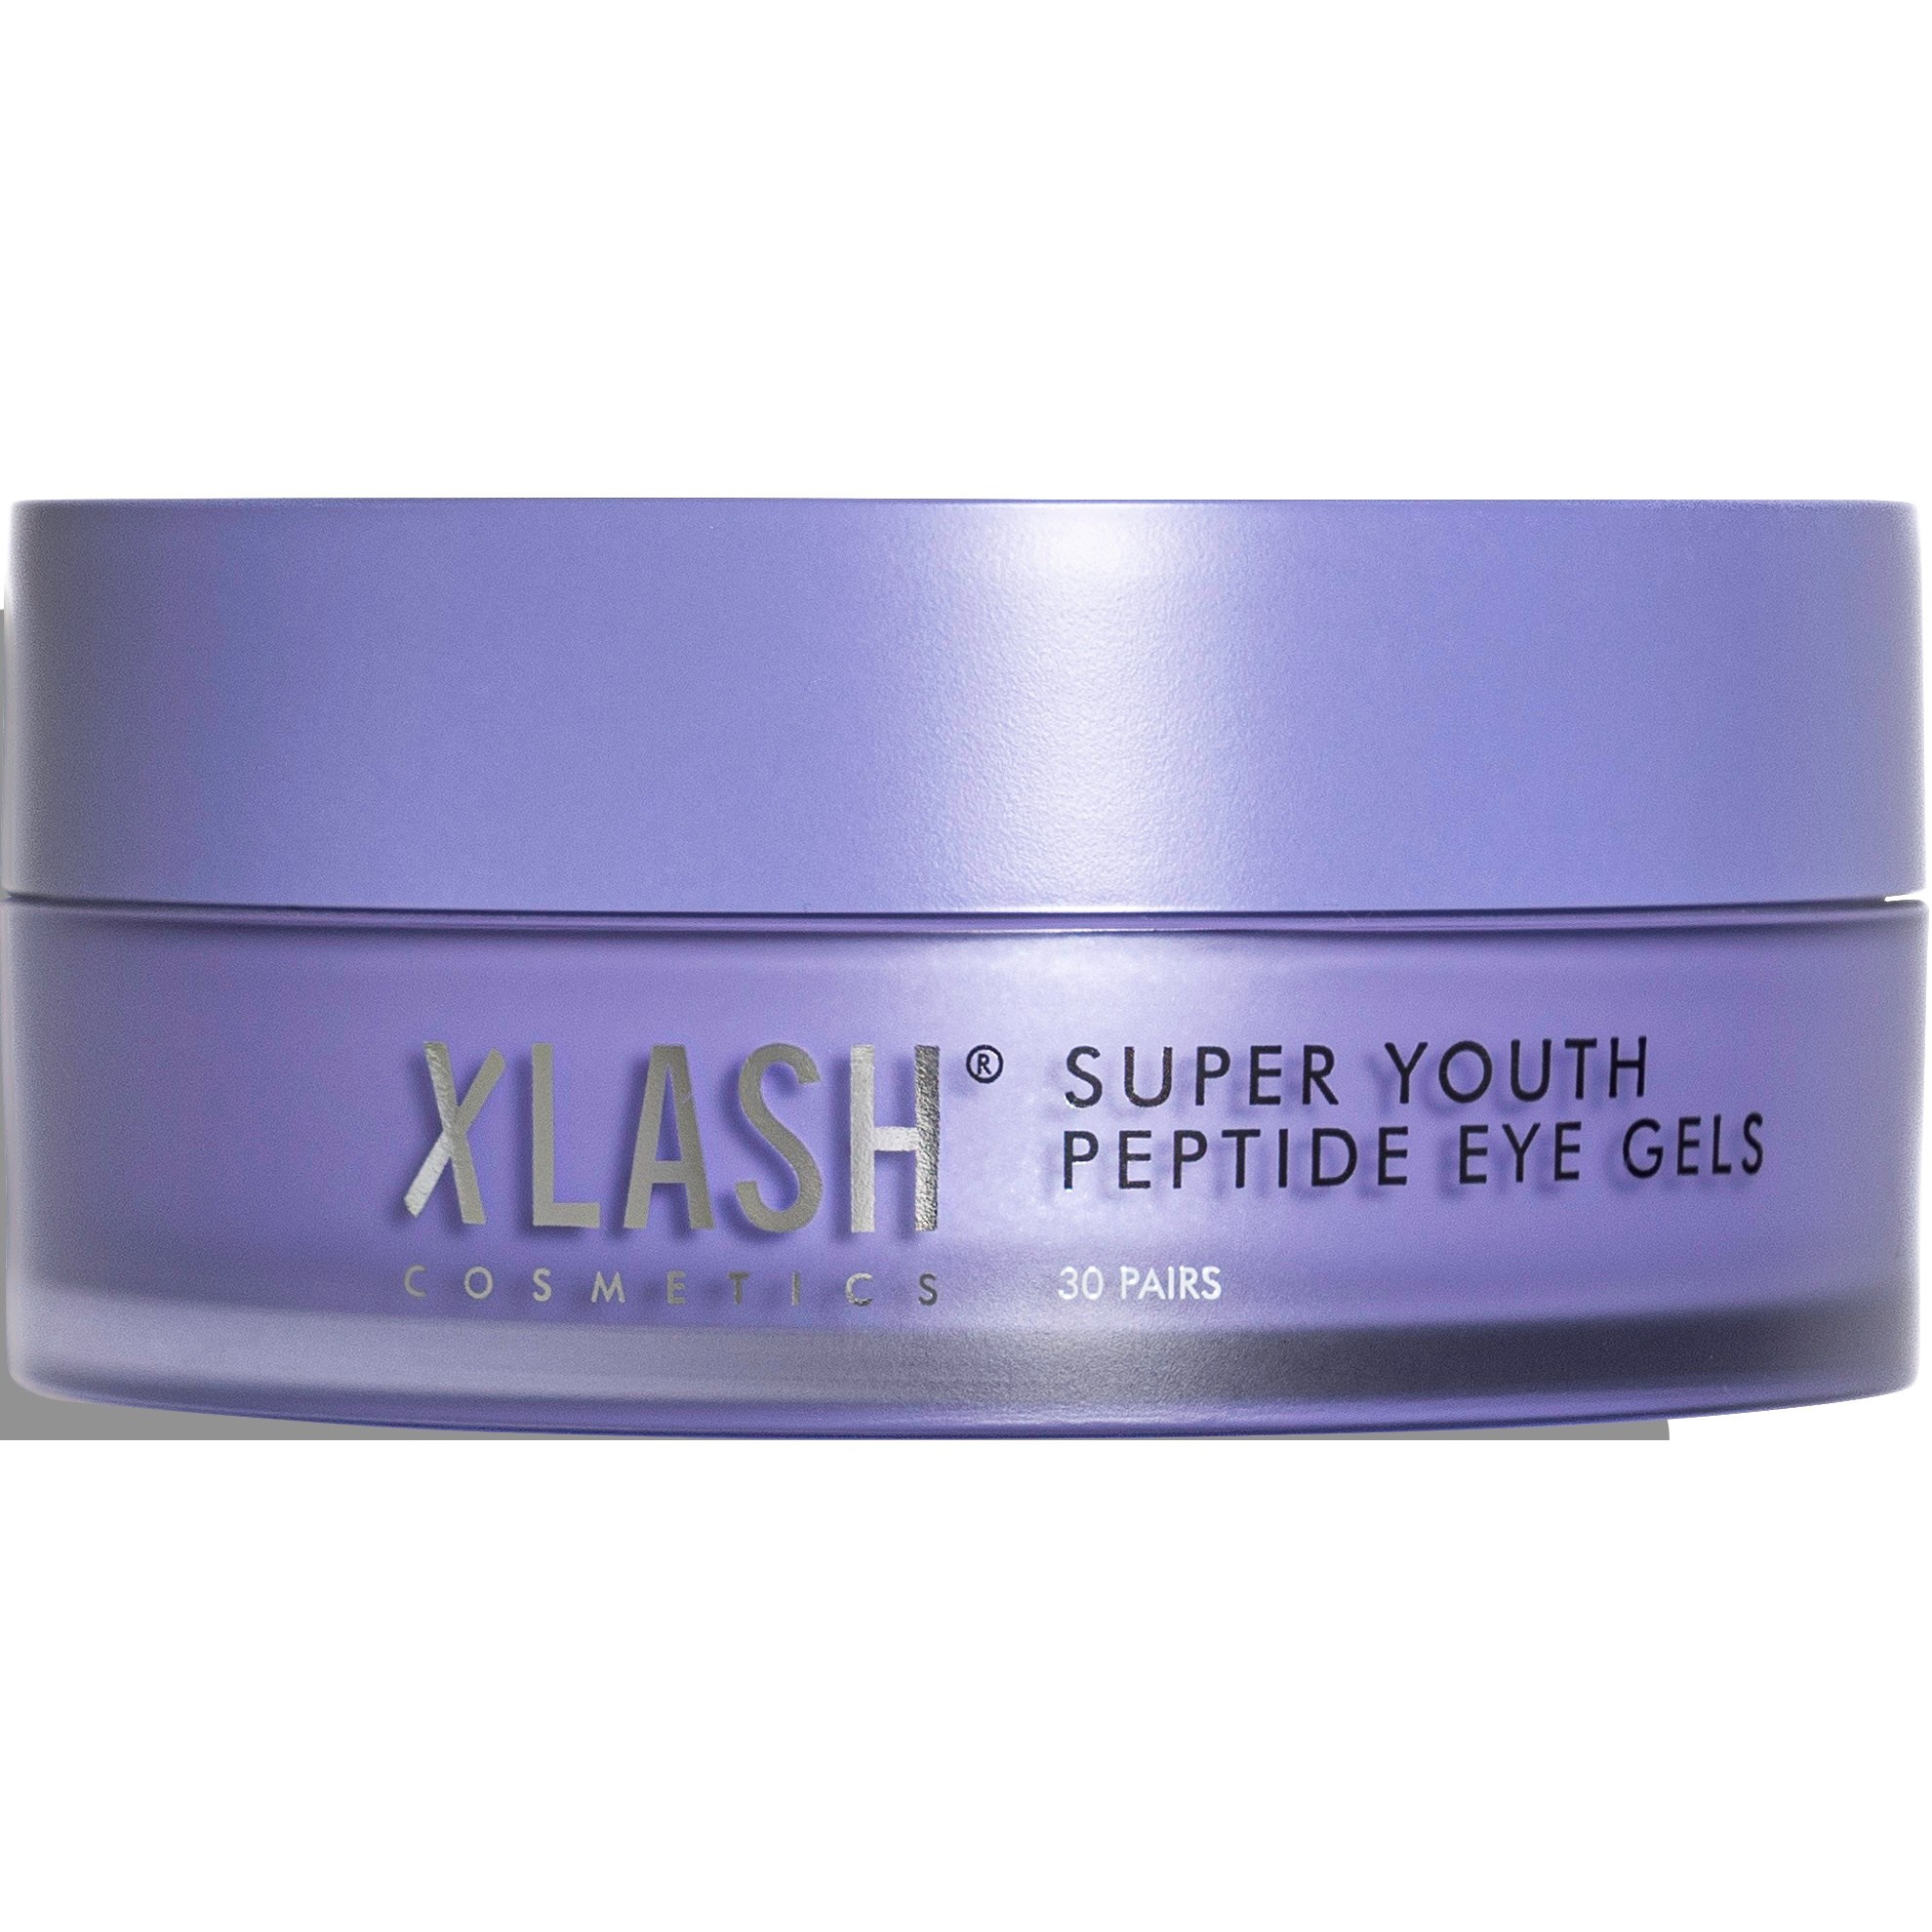 Bilde av Xlash Super Youth Peptide Eye Gels